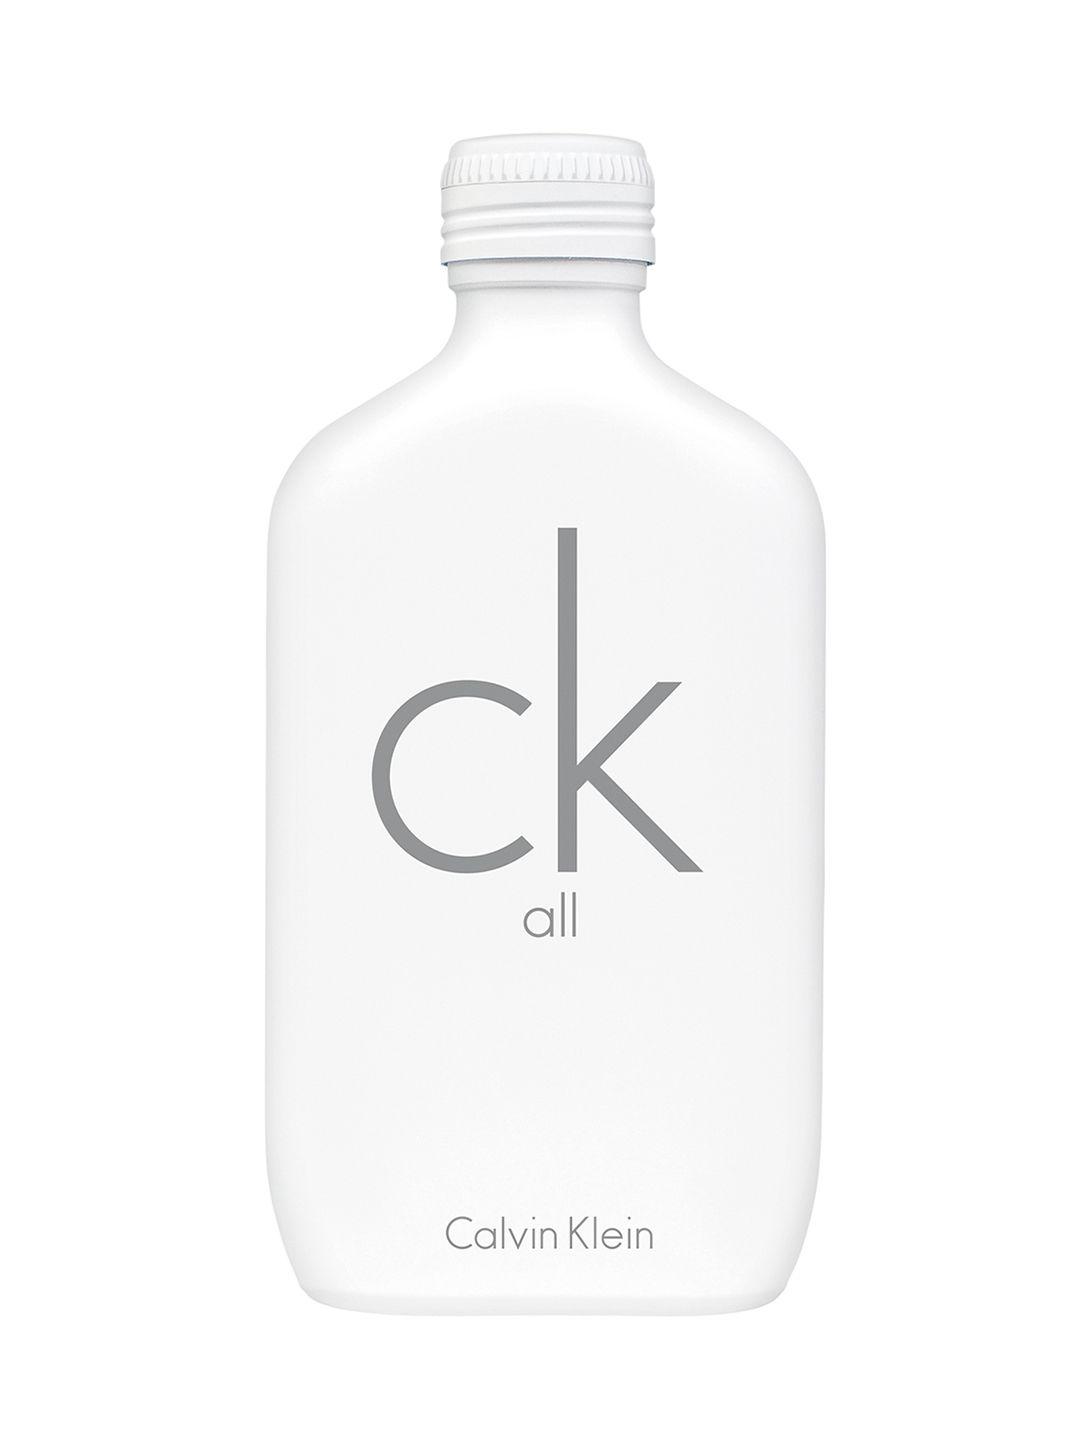 calvin-klein-all-unisex-eau-de-toilette-perfume